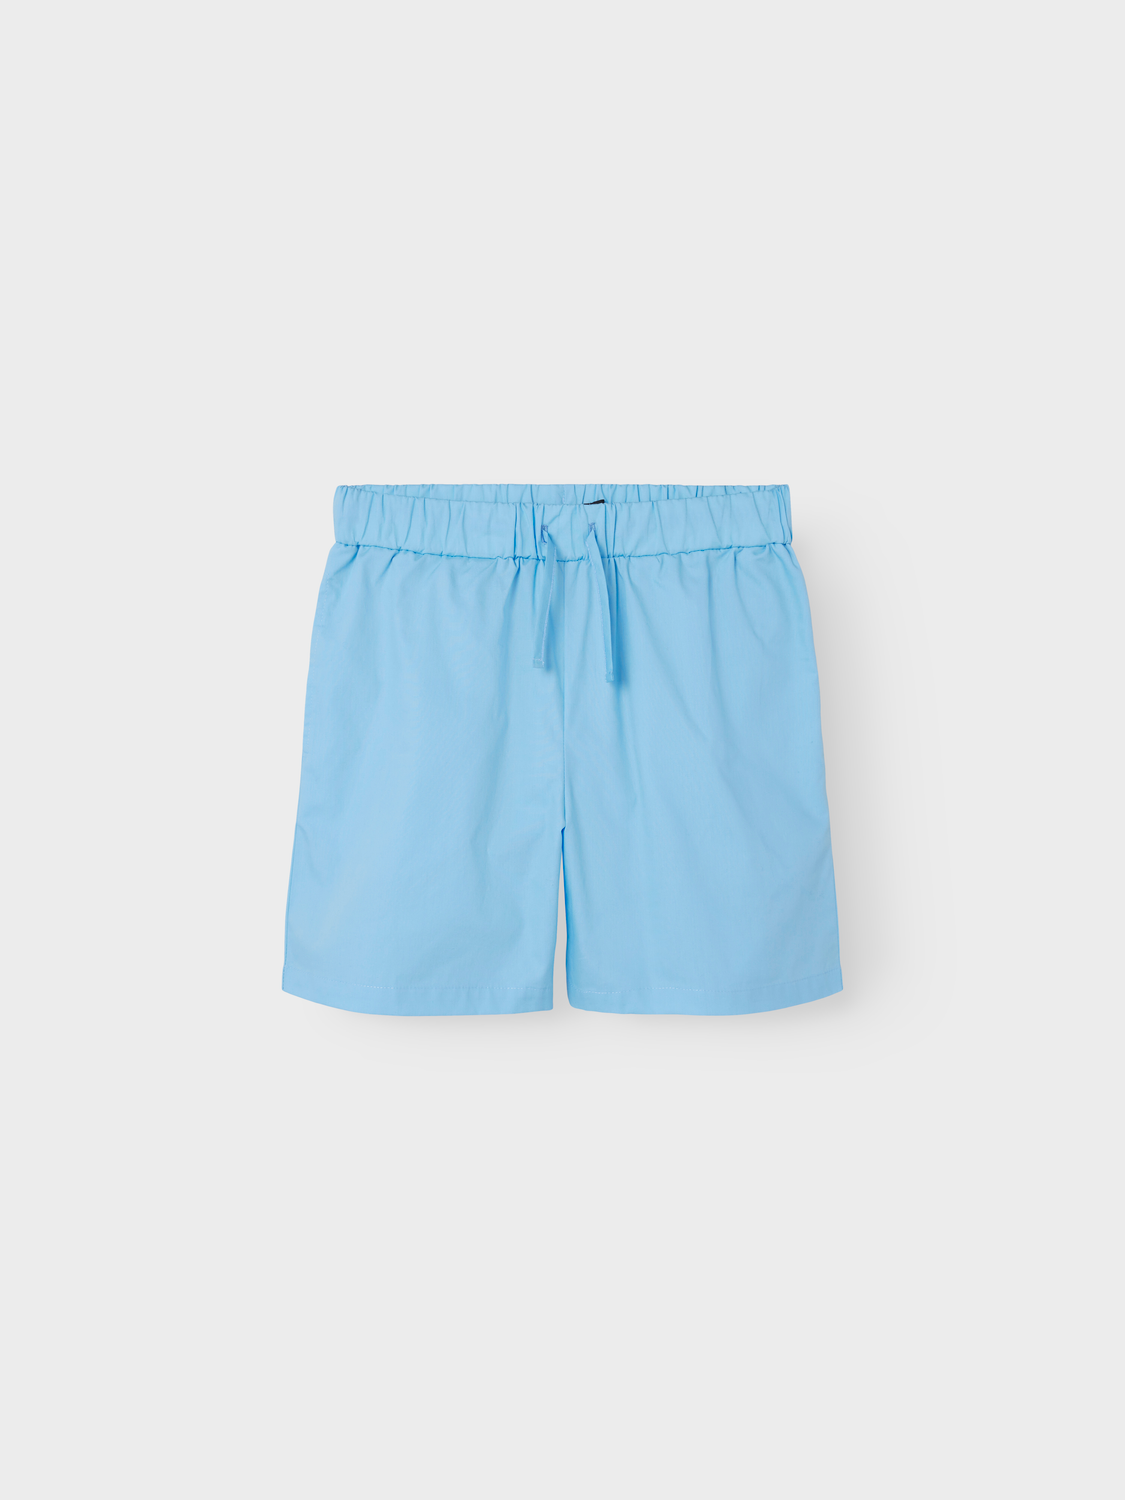 NLFFOUISE Shorts - All Aboard